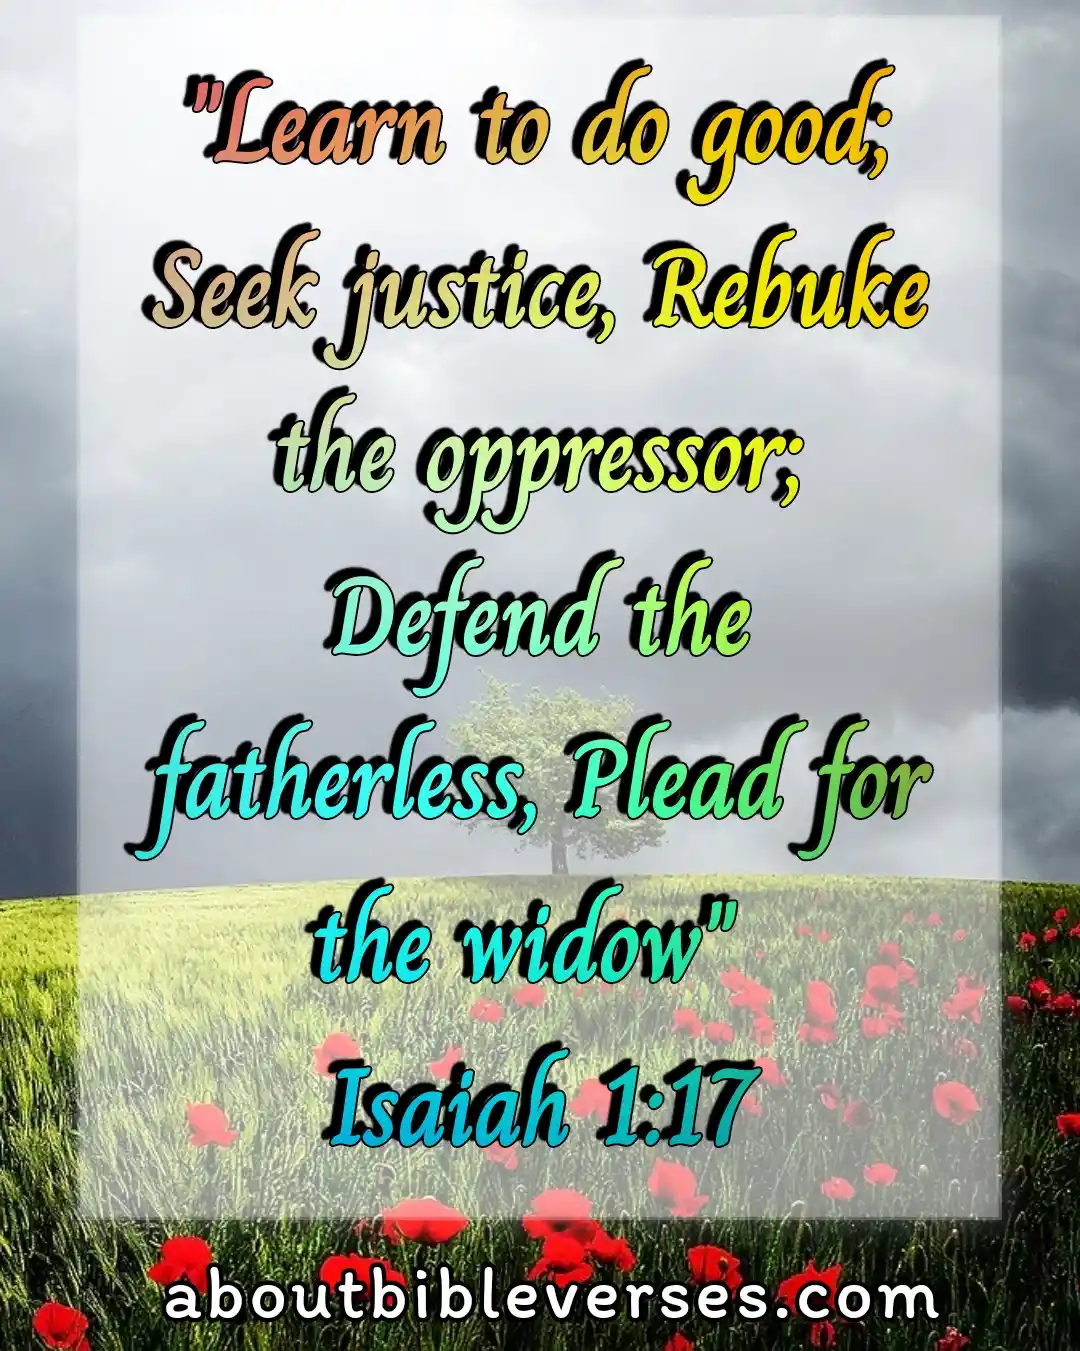 bible verses about widows (Isaiah 1:17)